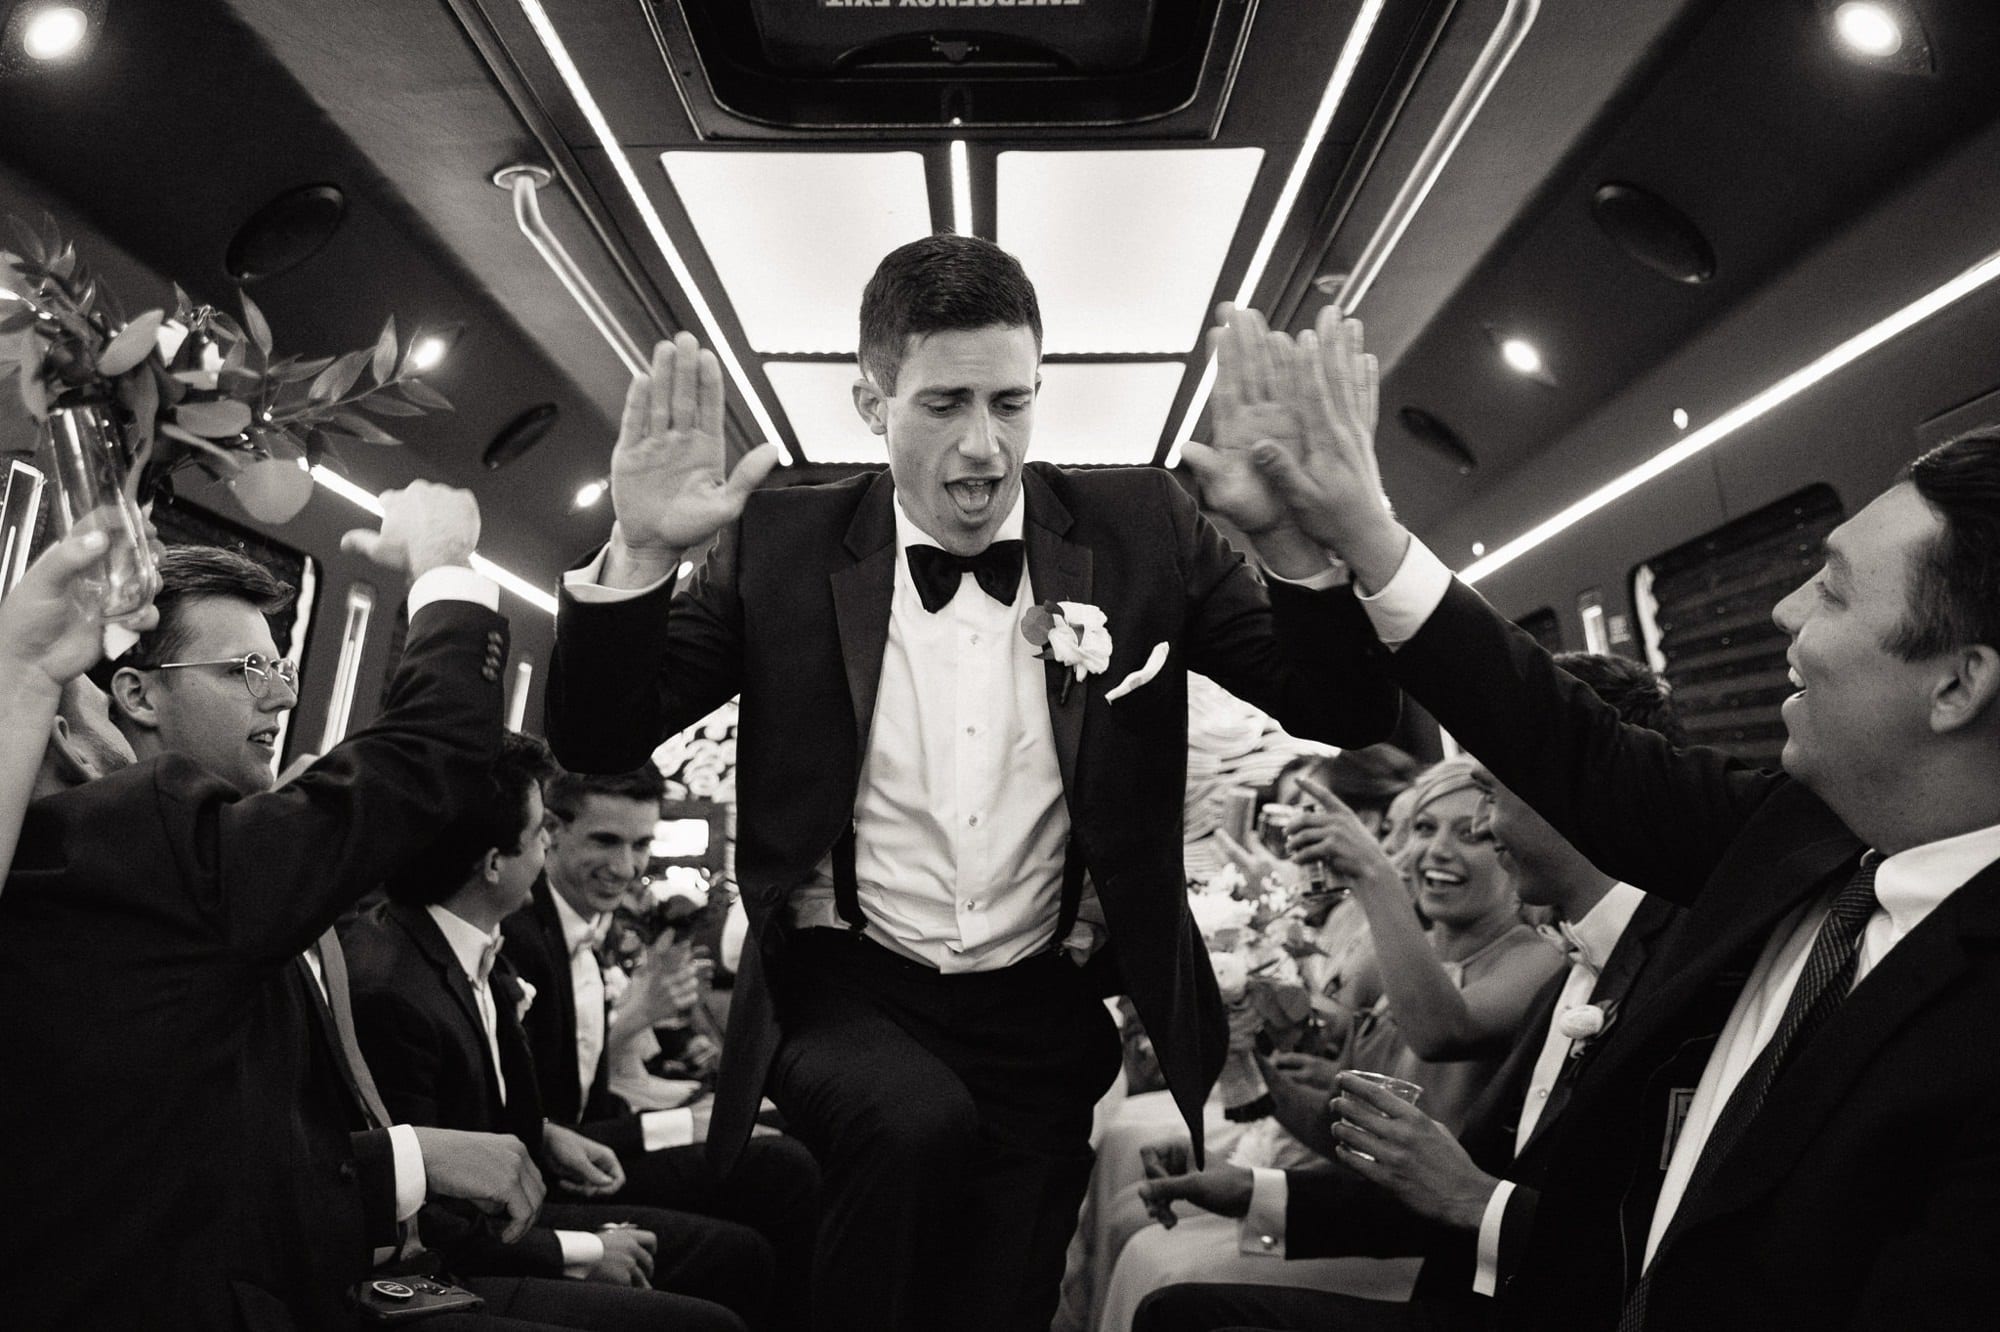 groom high-fiving wedding party on wedding bus